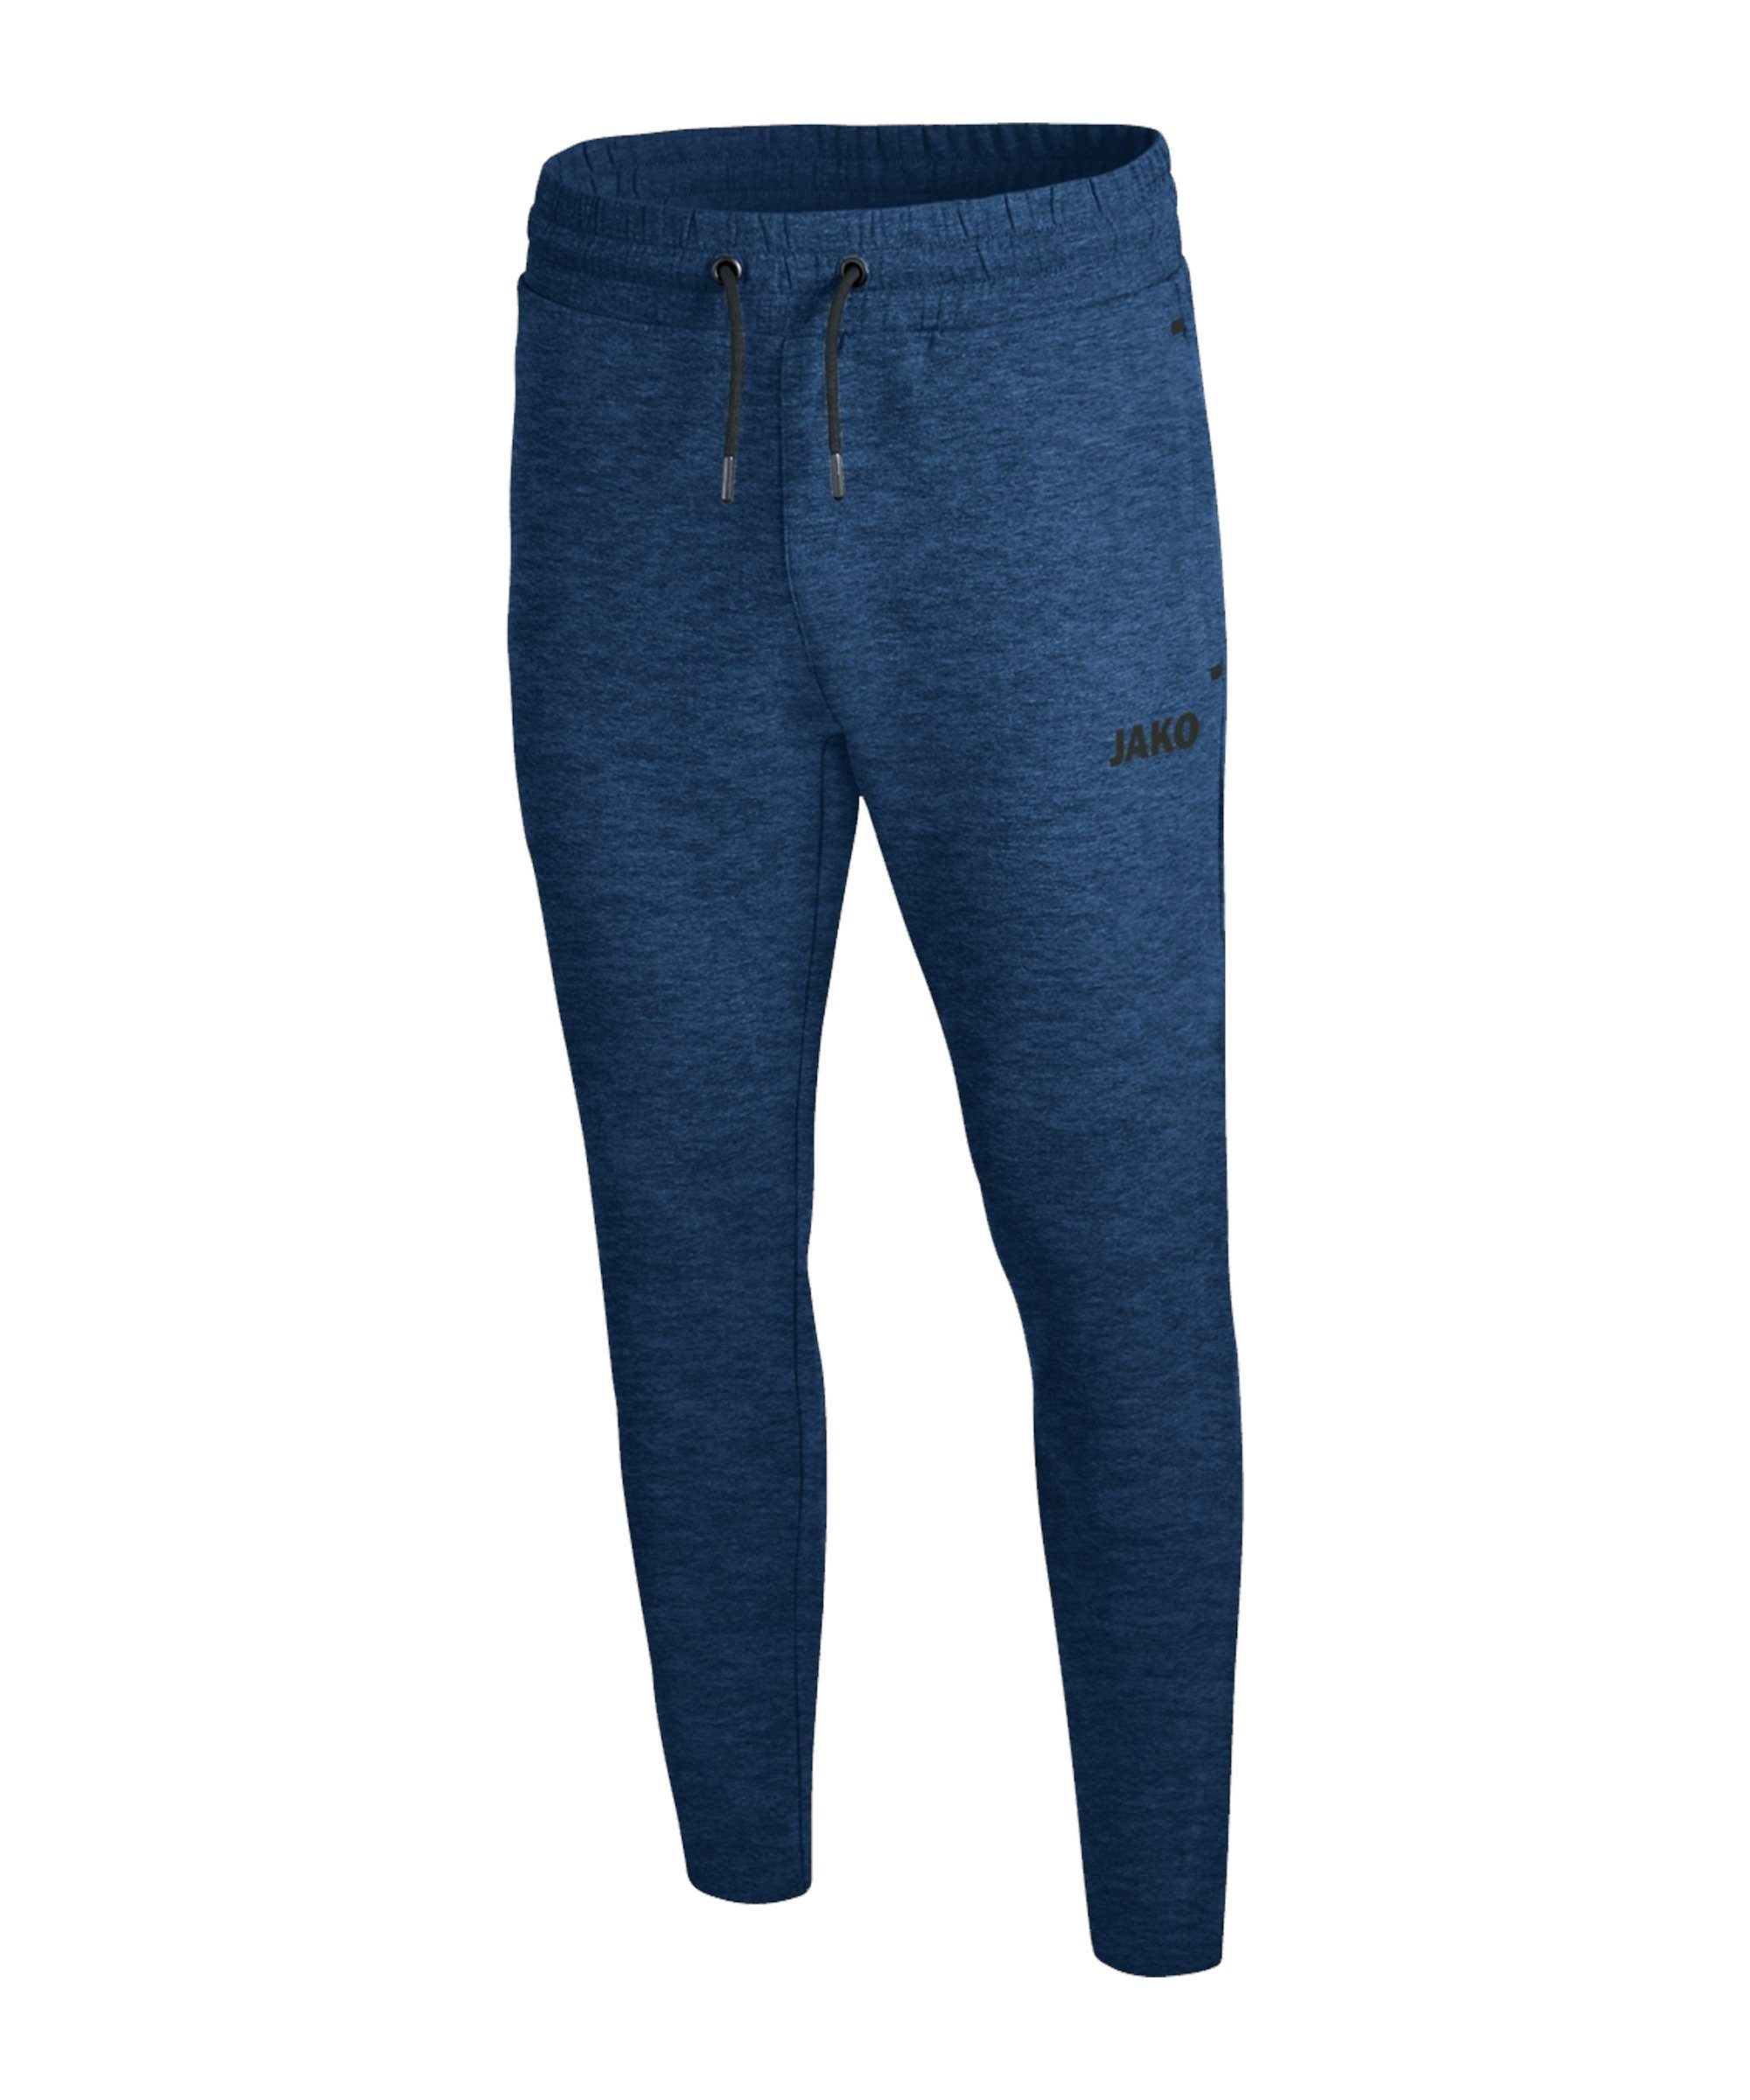 Jako Sporthose Premium Basic Jogginghose blau